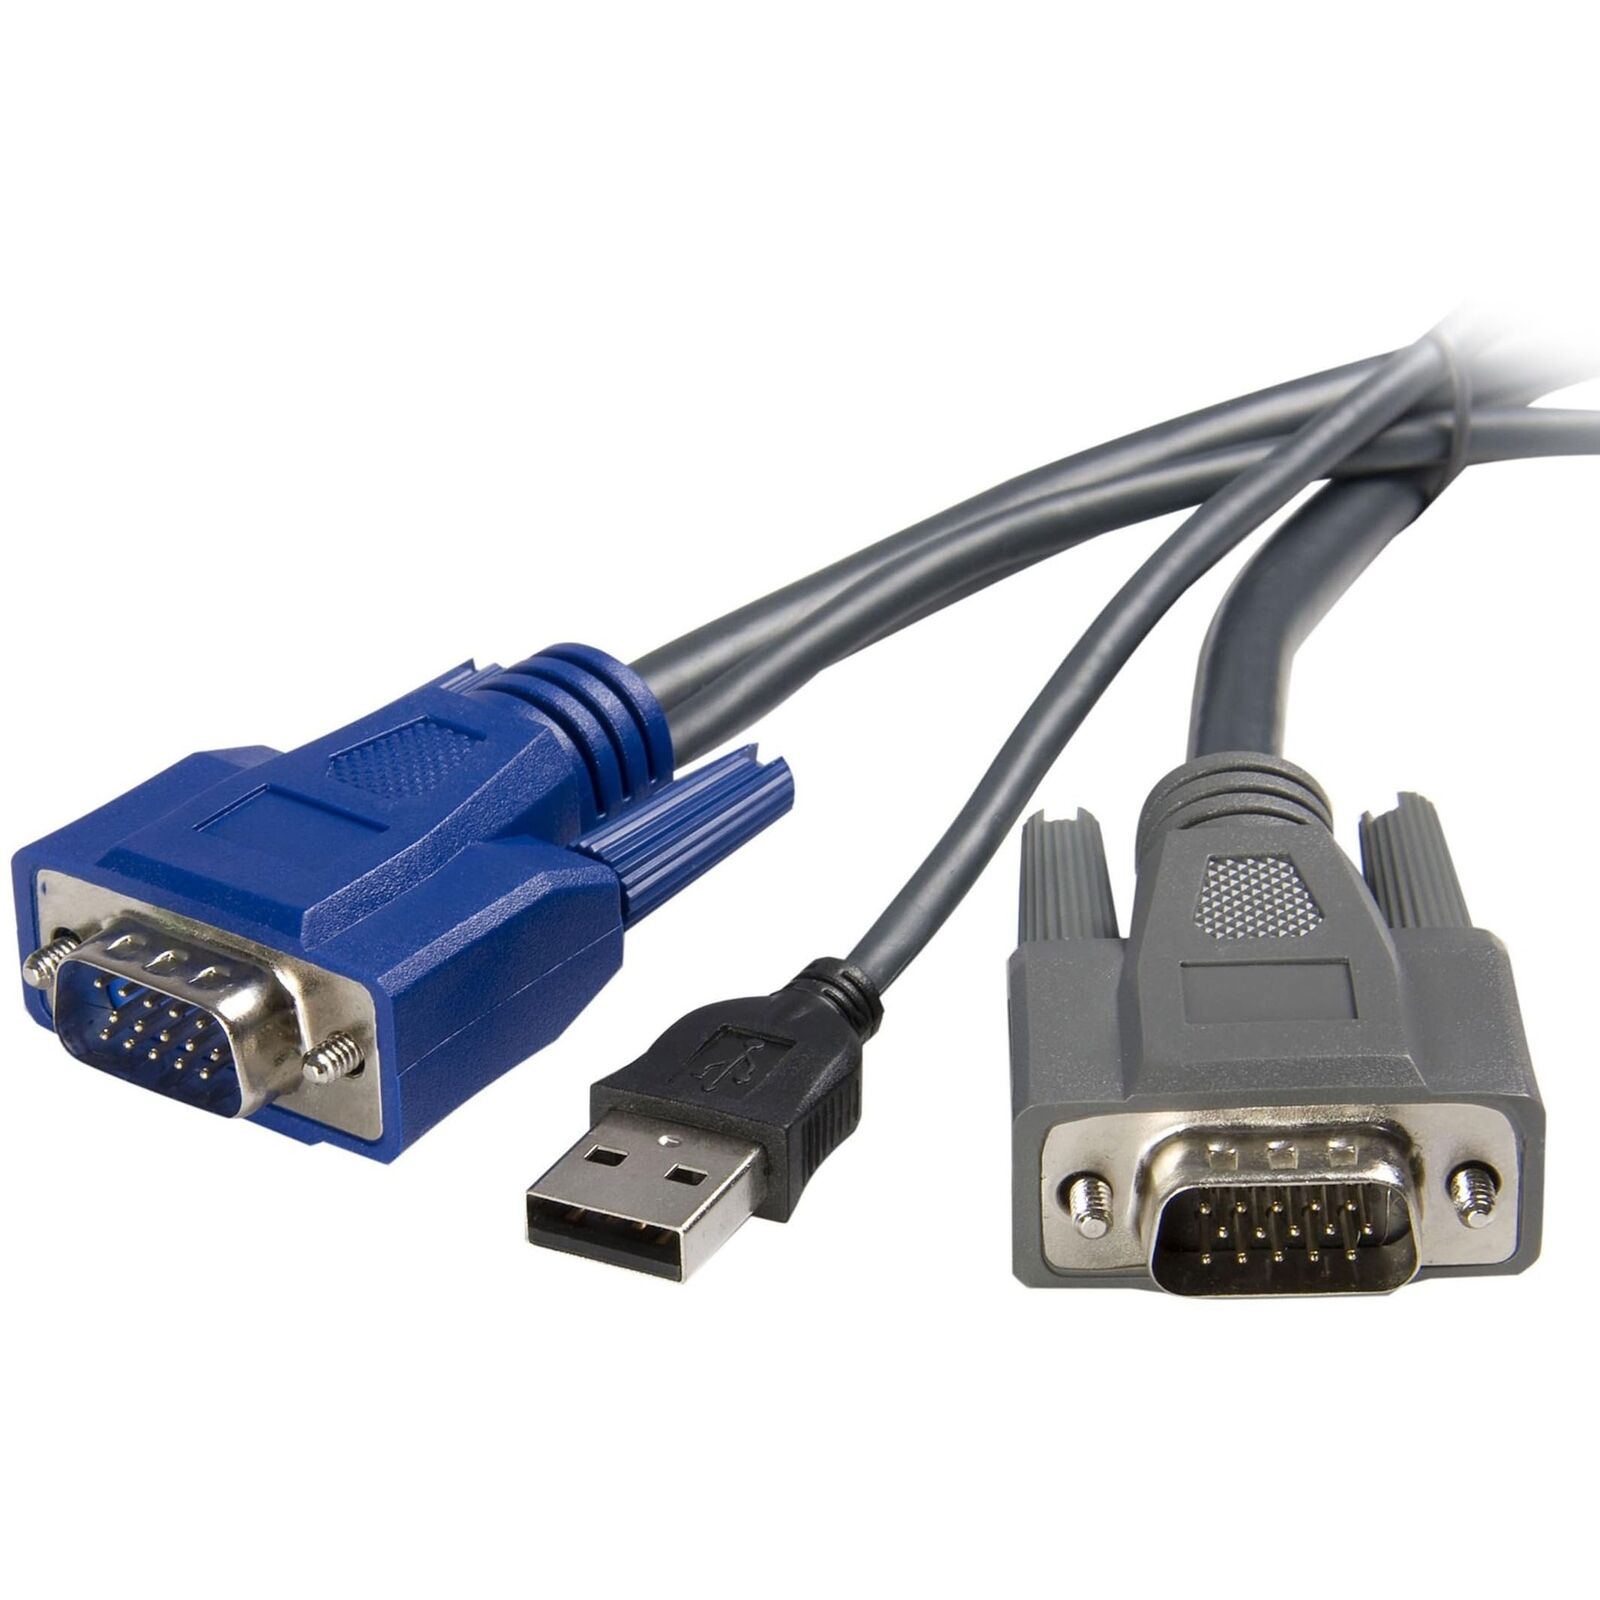 StarTech.com 6 ft Ultra-Thin USB VGA 2-in-1 KVM Cable (SVUSBVGA6) 6 ft/2 m